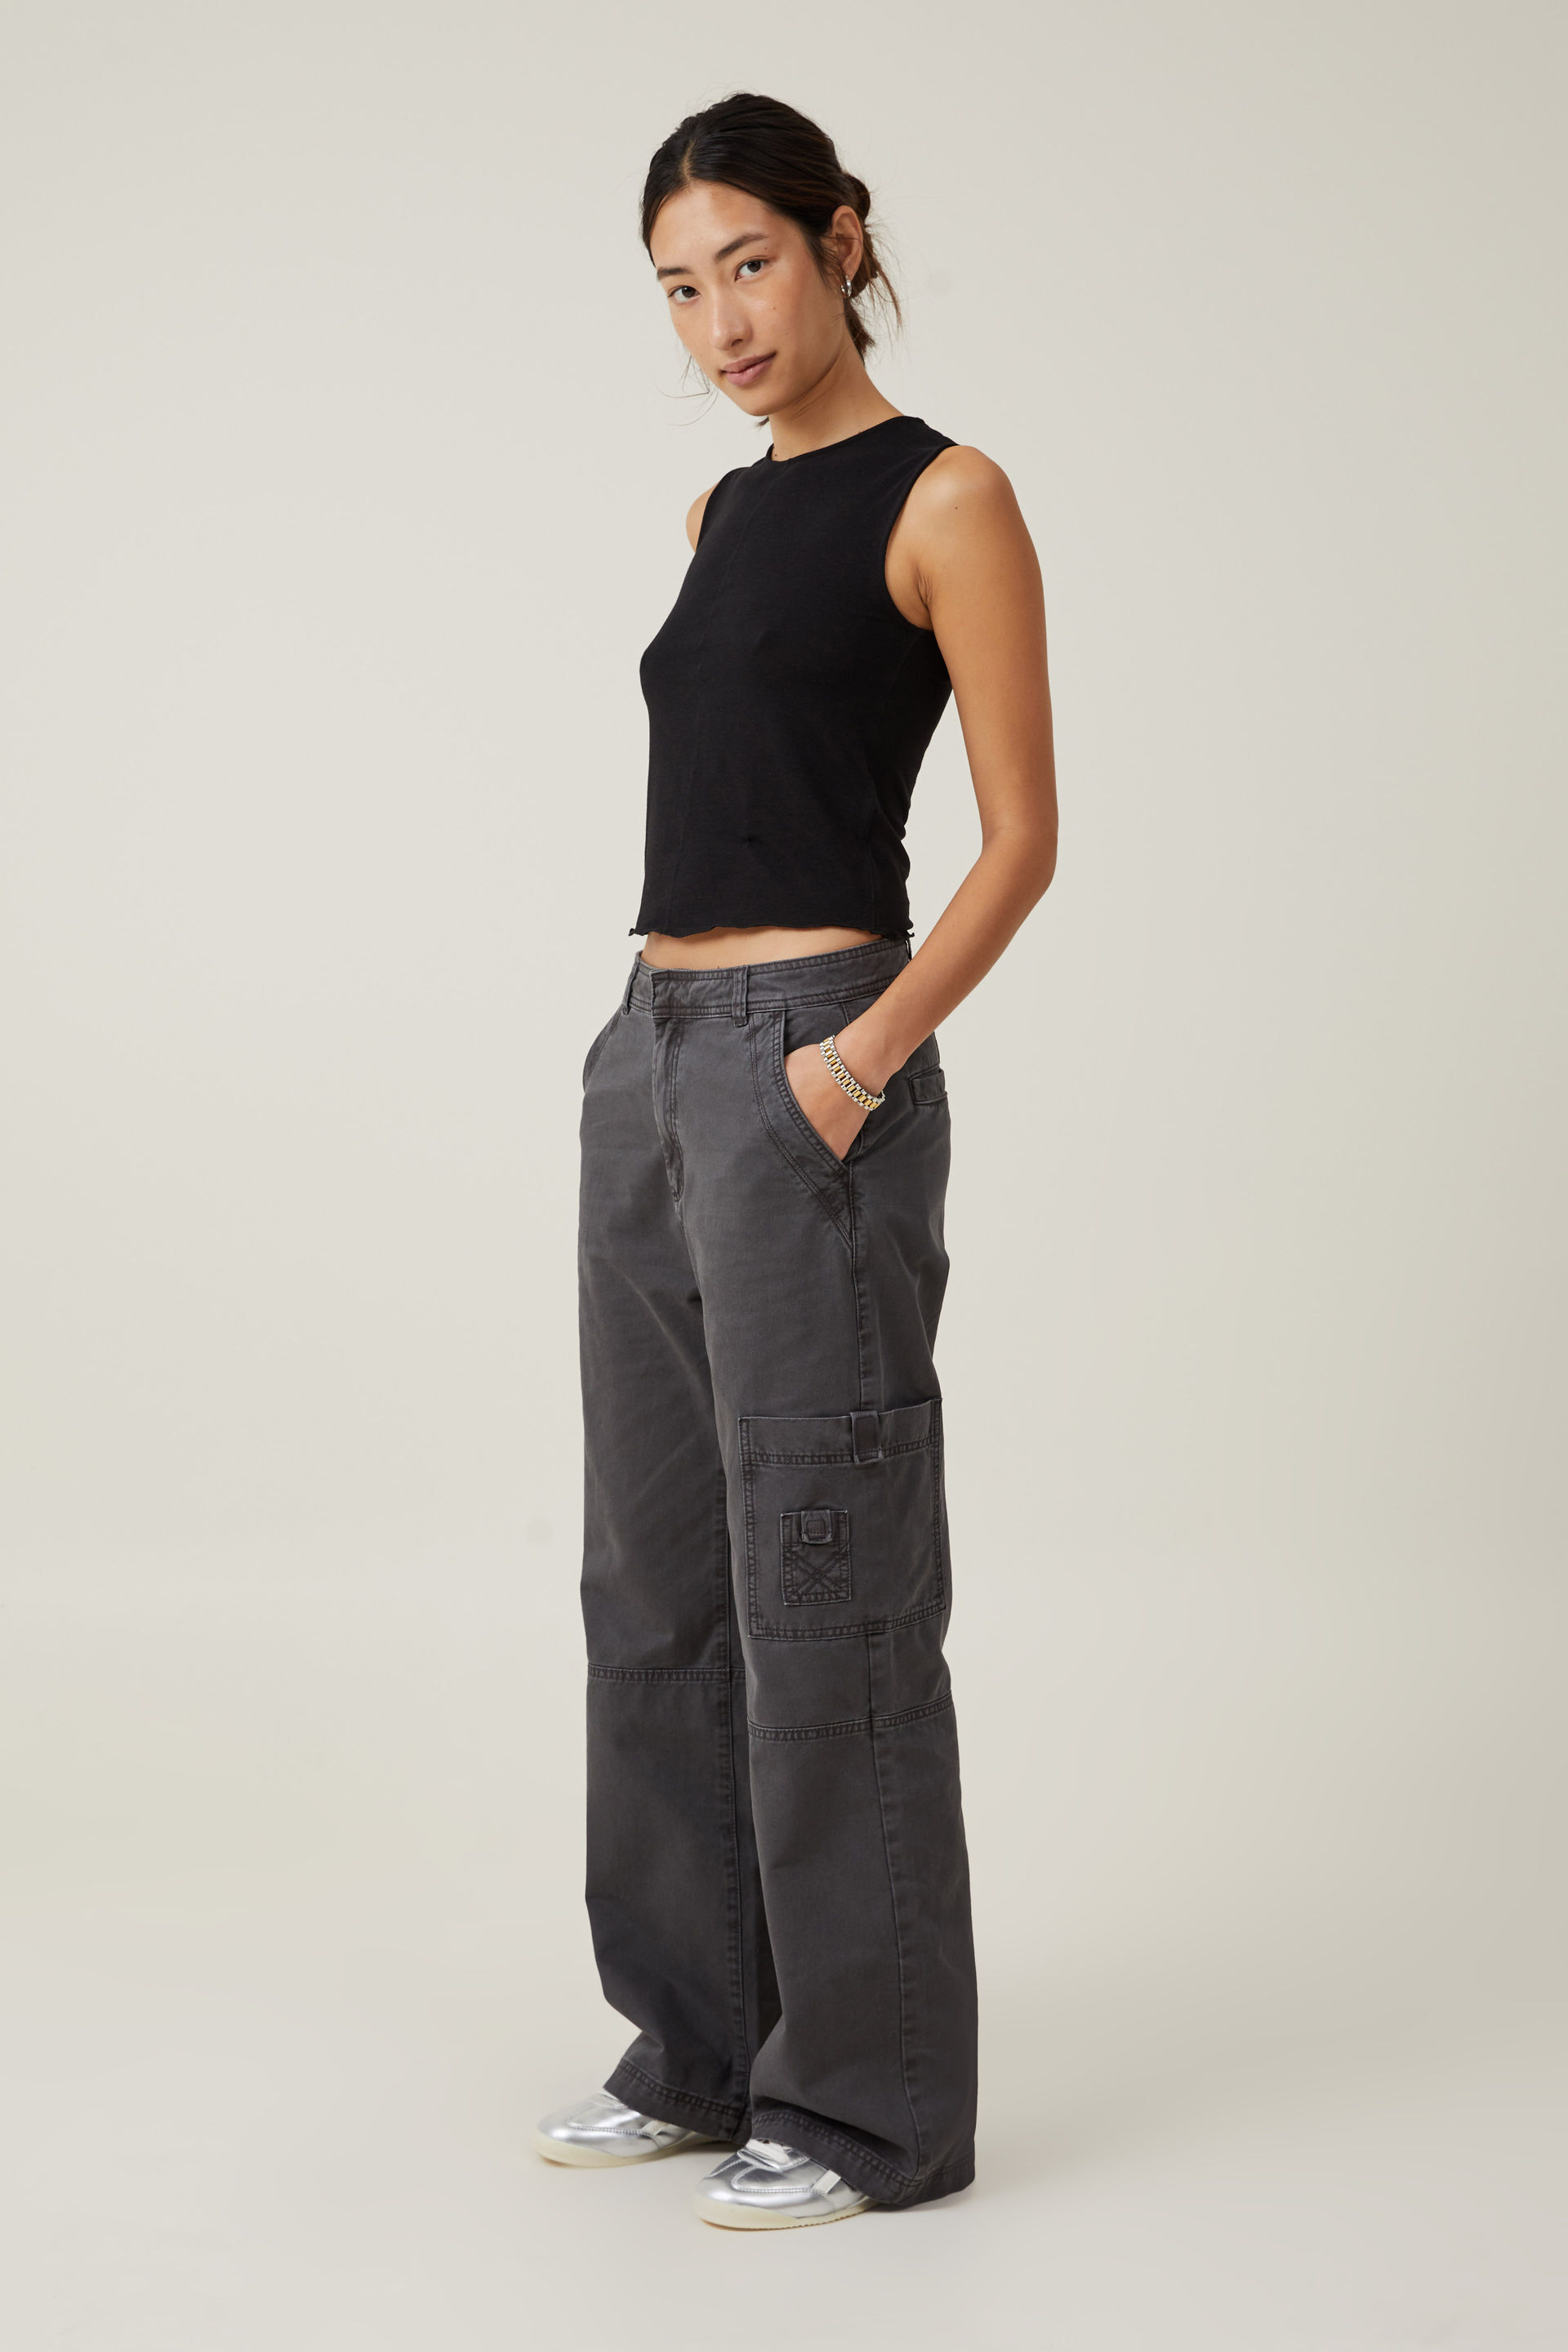 Nylon Parachute Pants - Dark gray - Ladies | H&M US